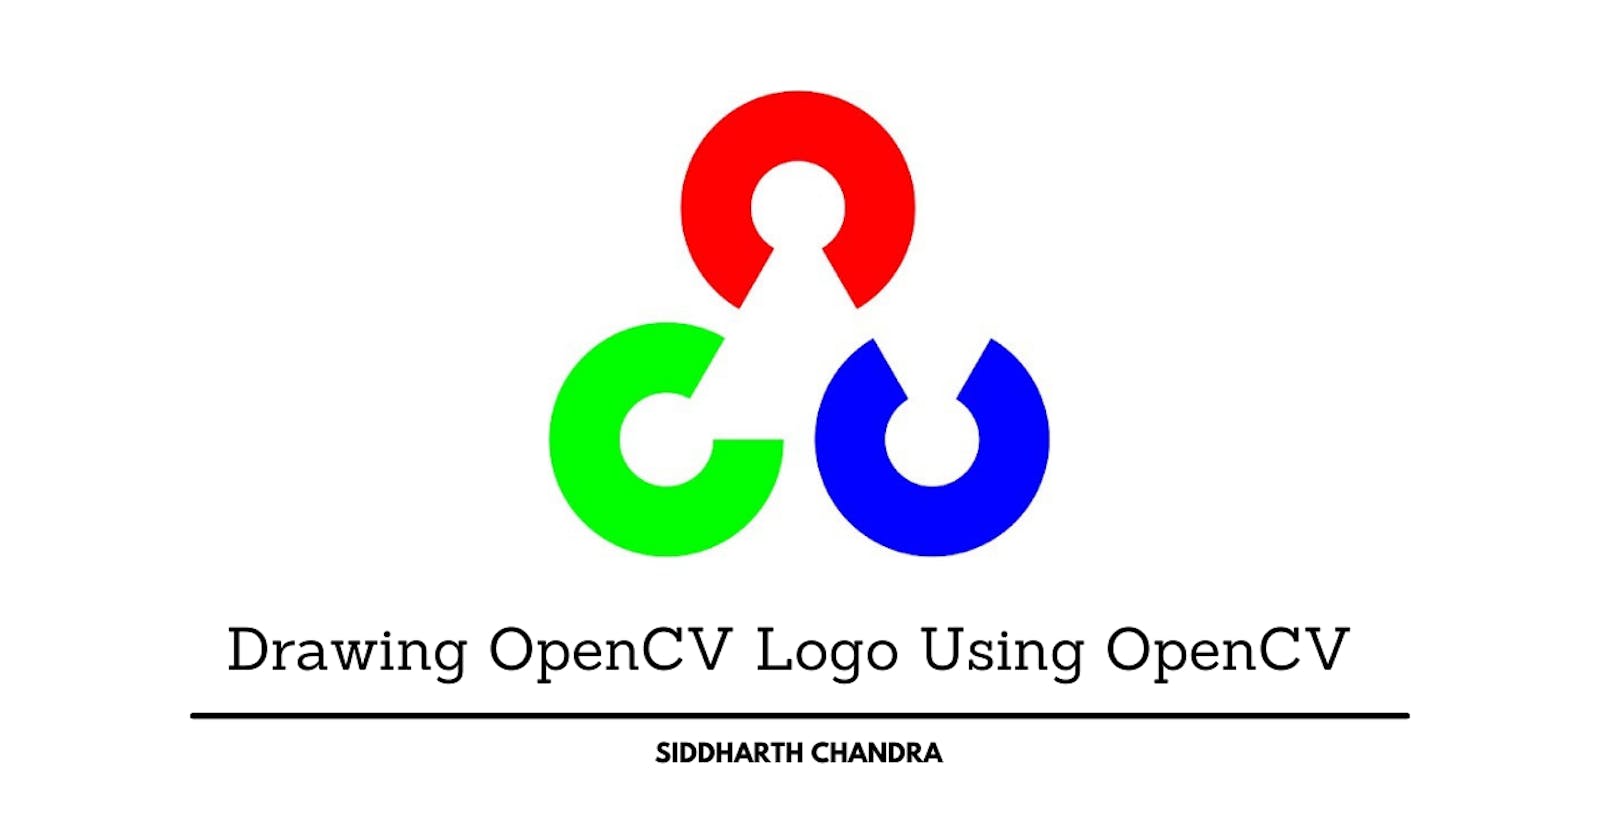 Let's Draw OpenCV Logo Using OpenCV